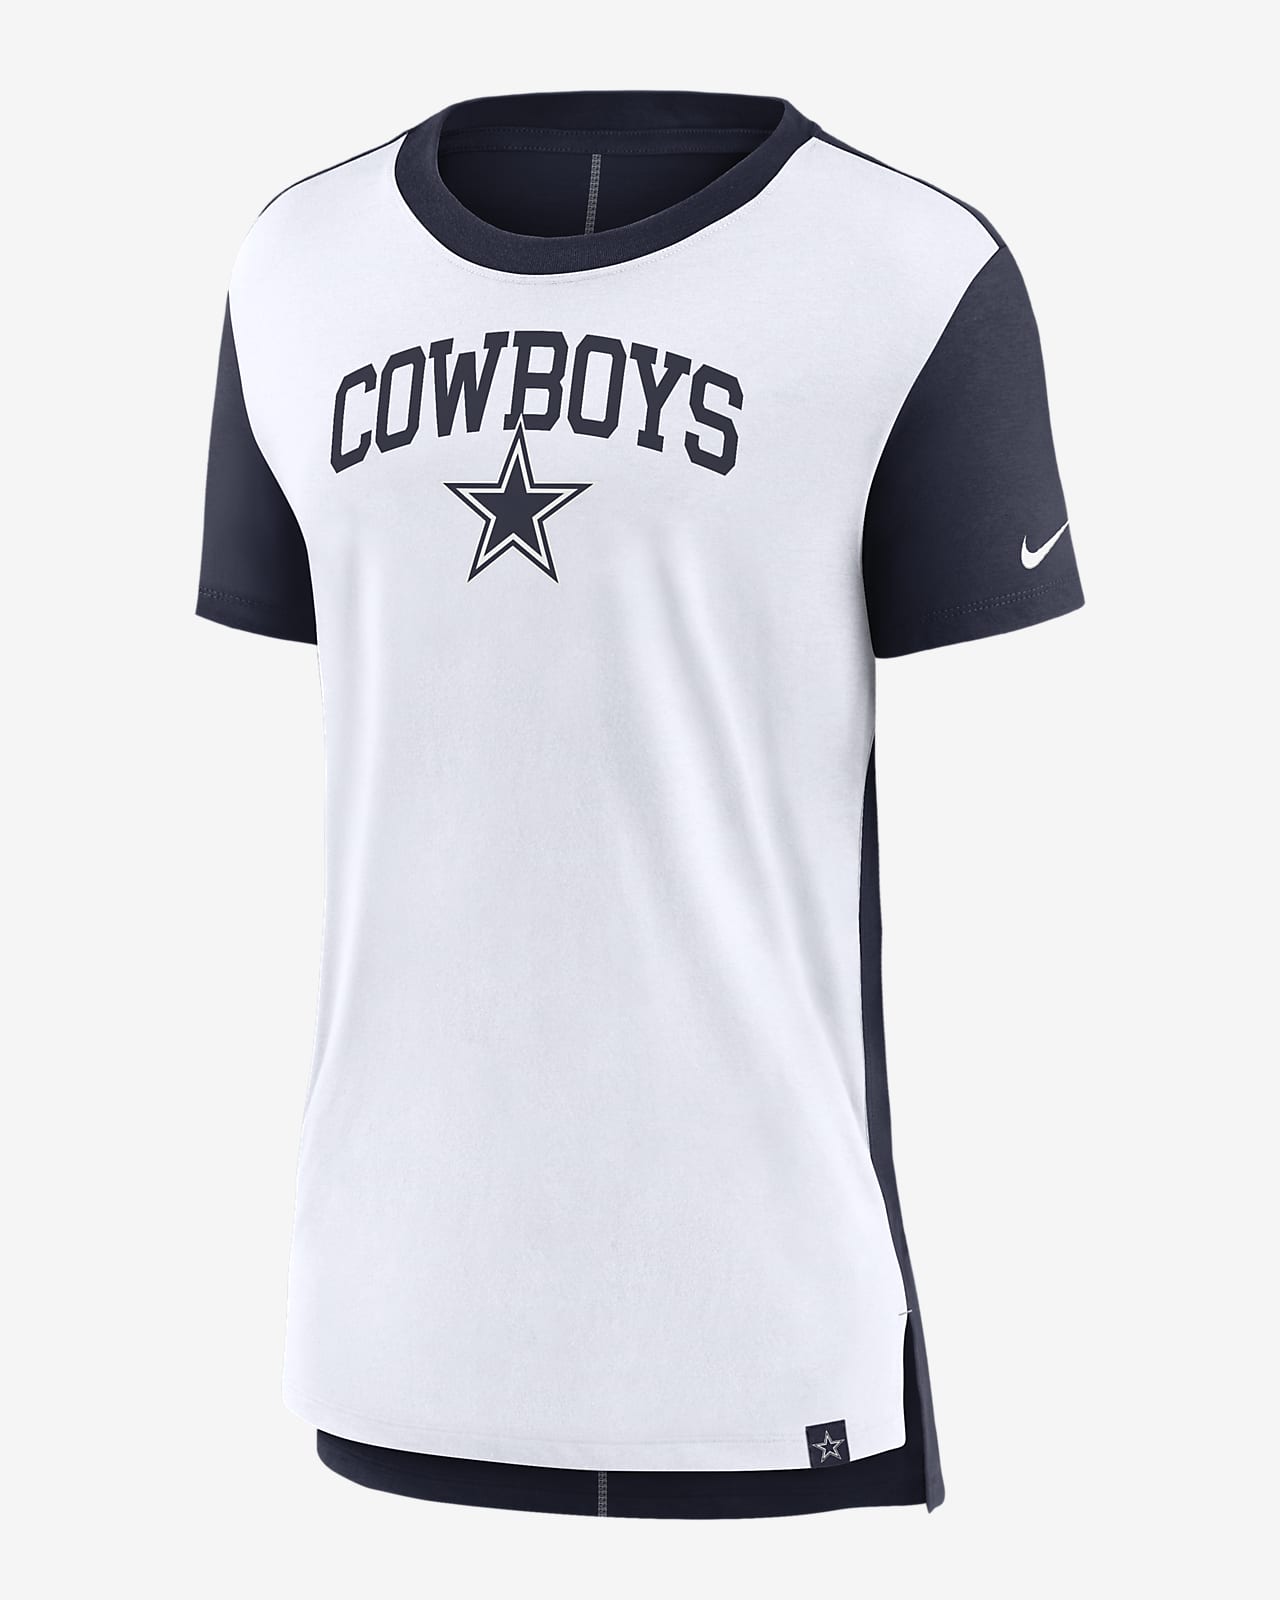 Dallas Cowboys Women's Nike NFL T-Shirt